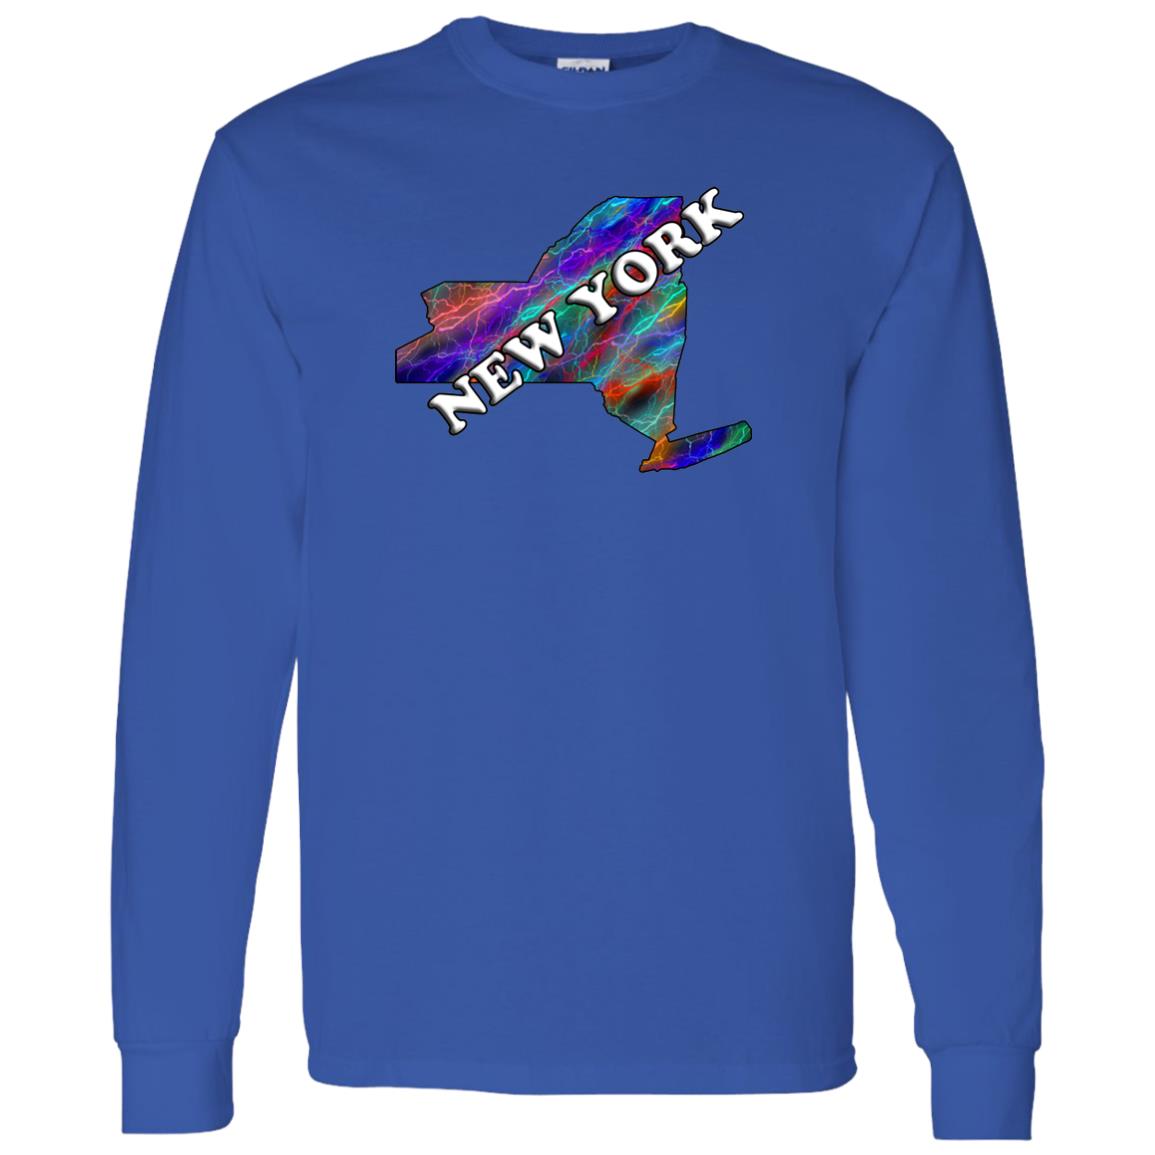 New York Long Sleeve T-Shirt